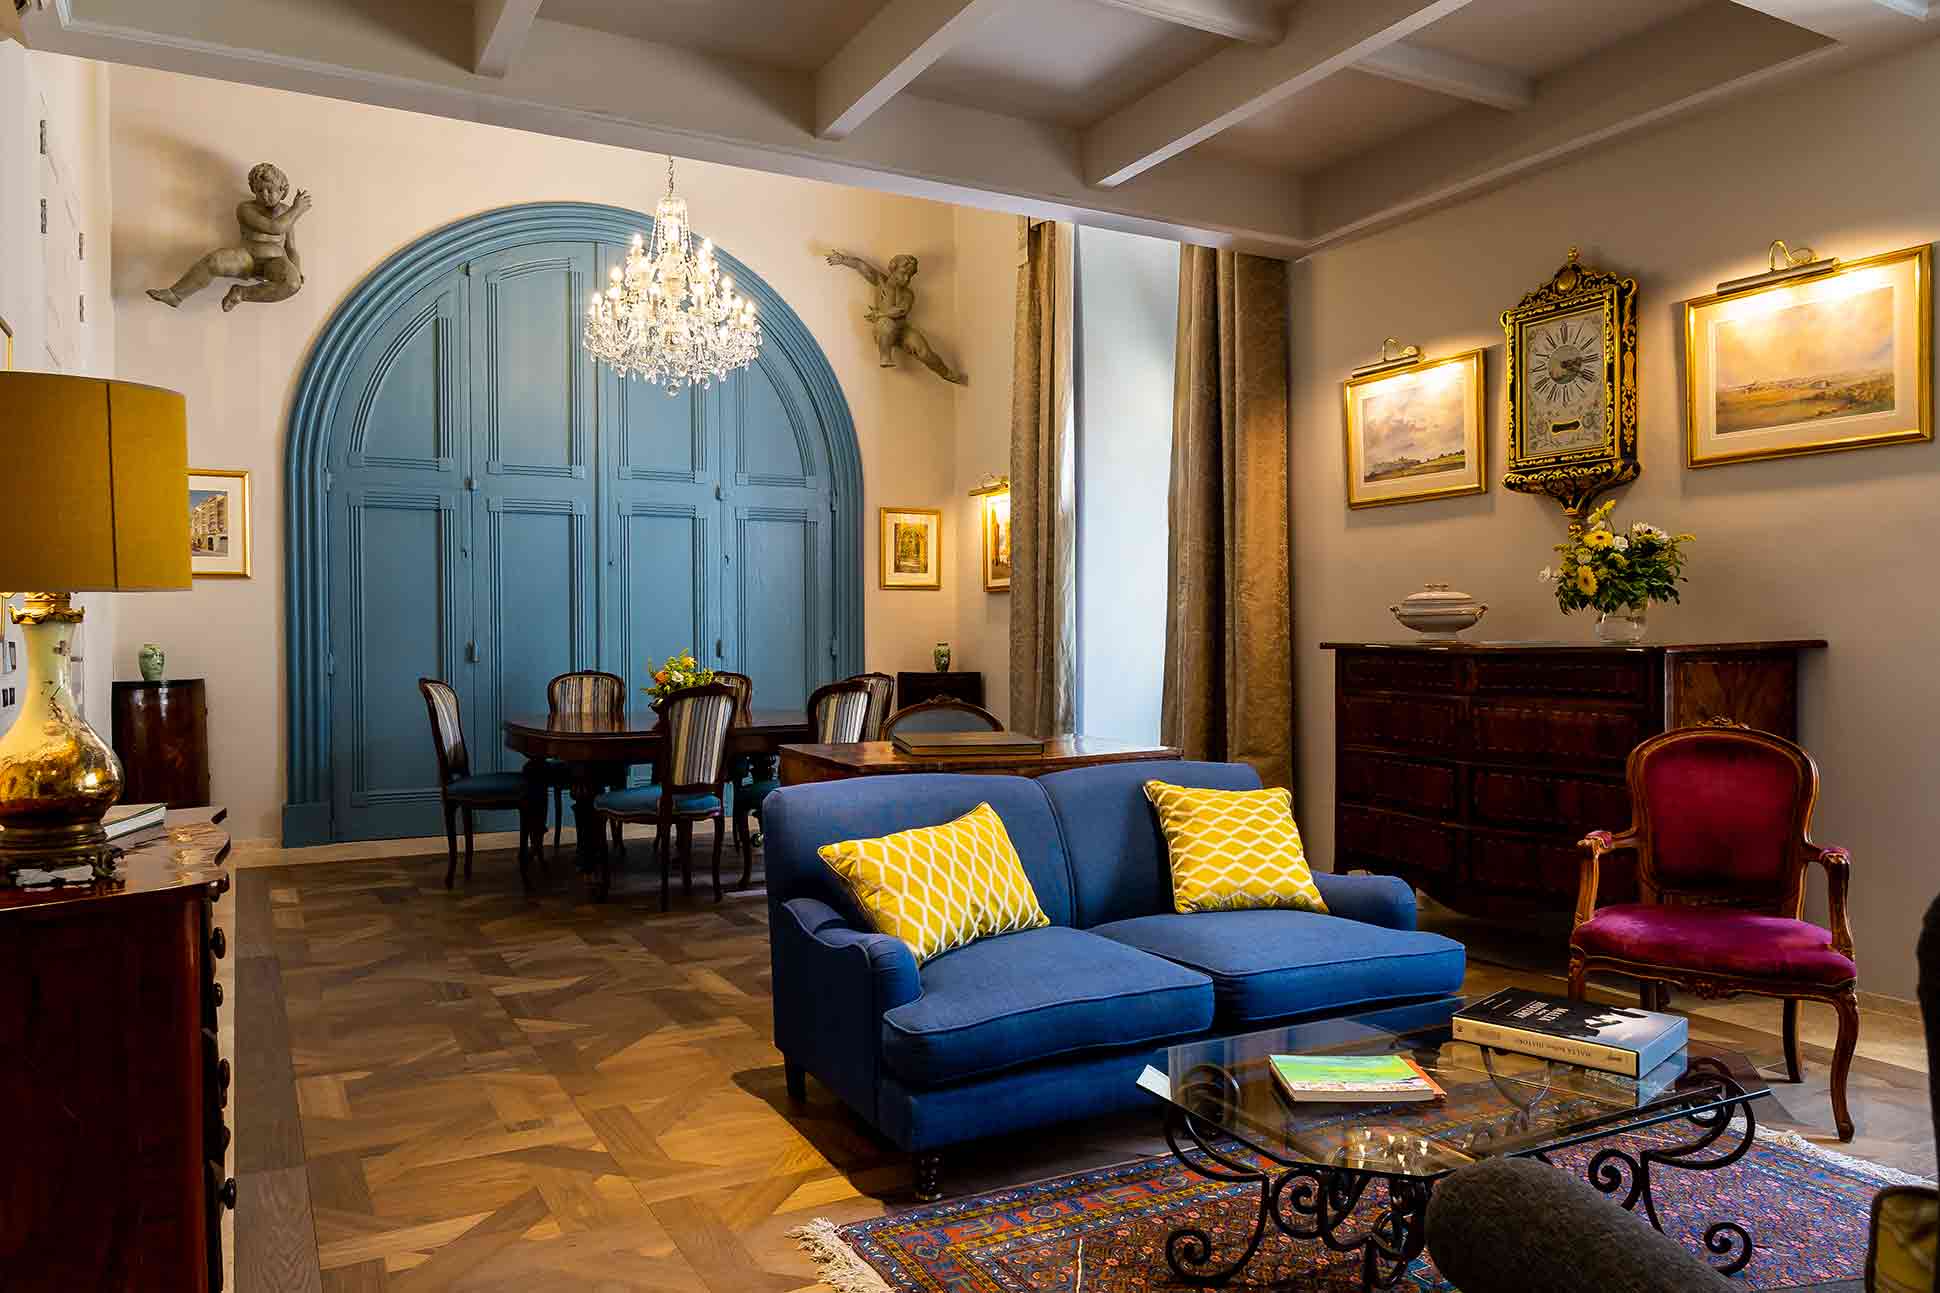 Xara Palace Relais & Chateaux Mdina Malta Presidential Suite